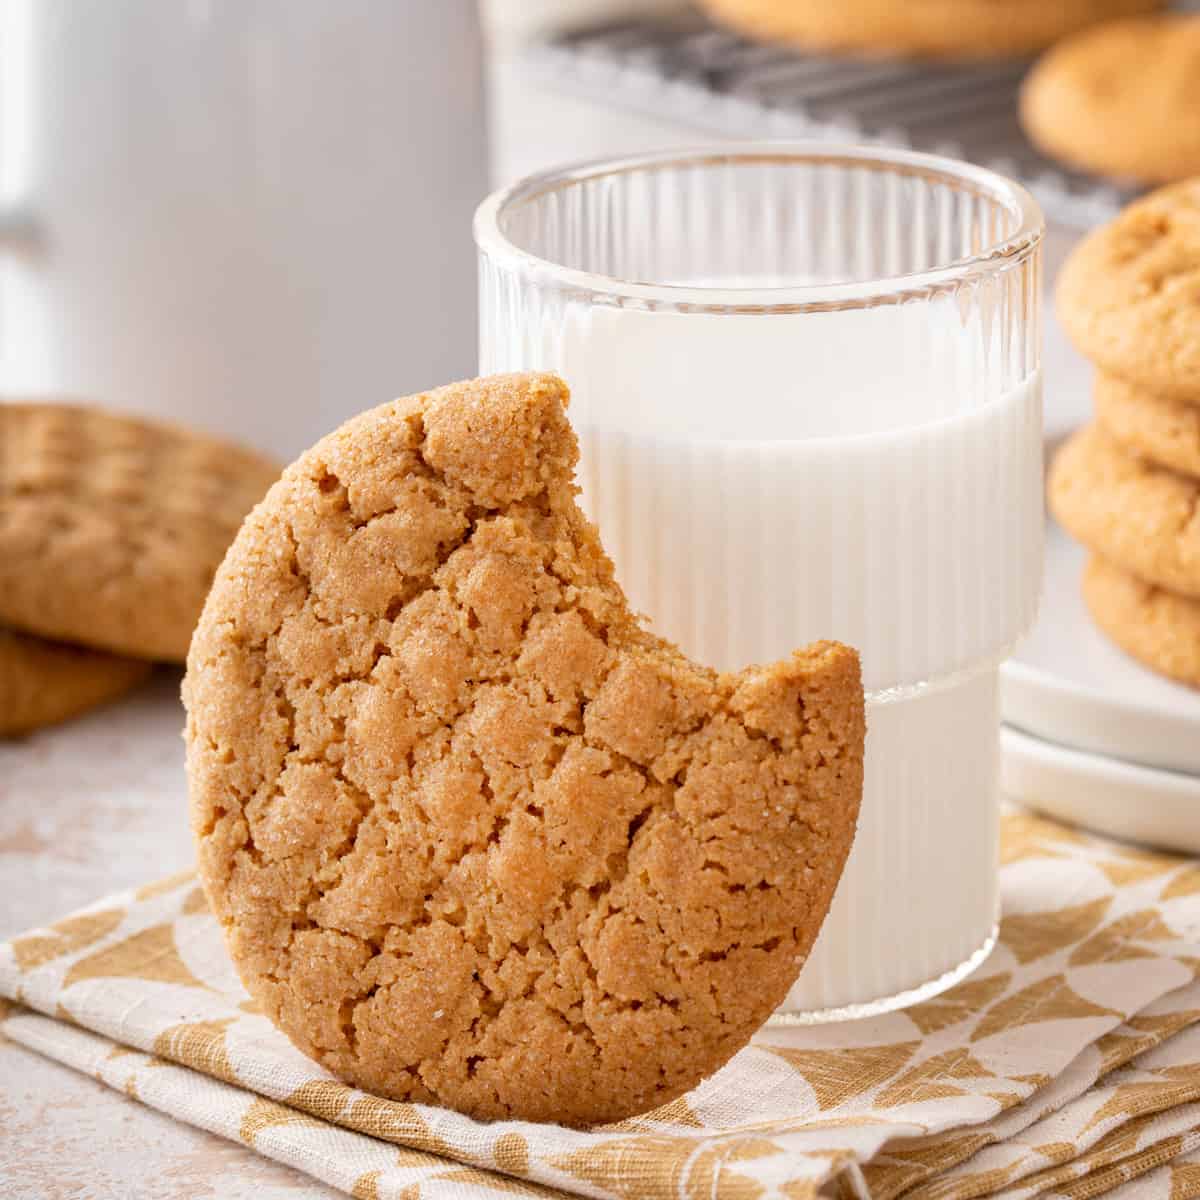 https://www.mybakingaddiction.com/wp-content/uploads/2013/04/bite-from-peanut-butter-cookie-hero.jpg